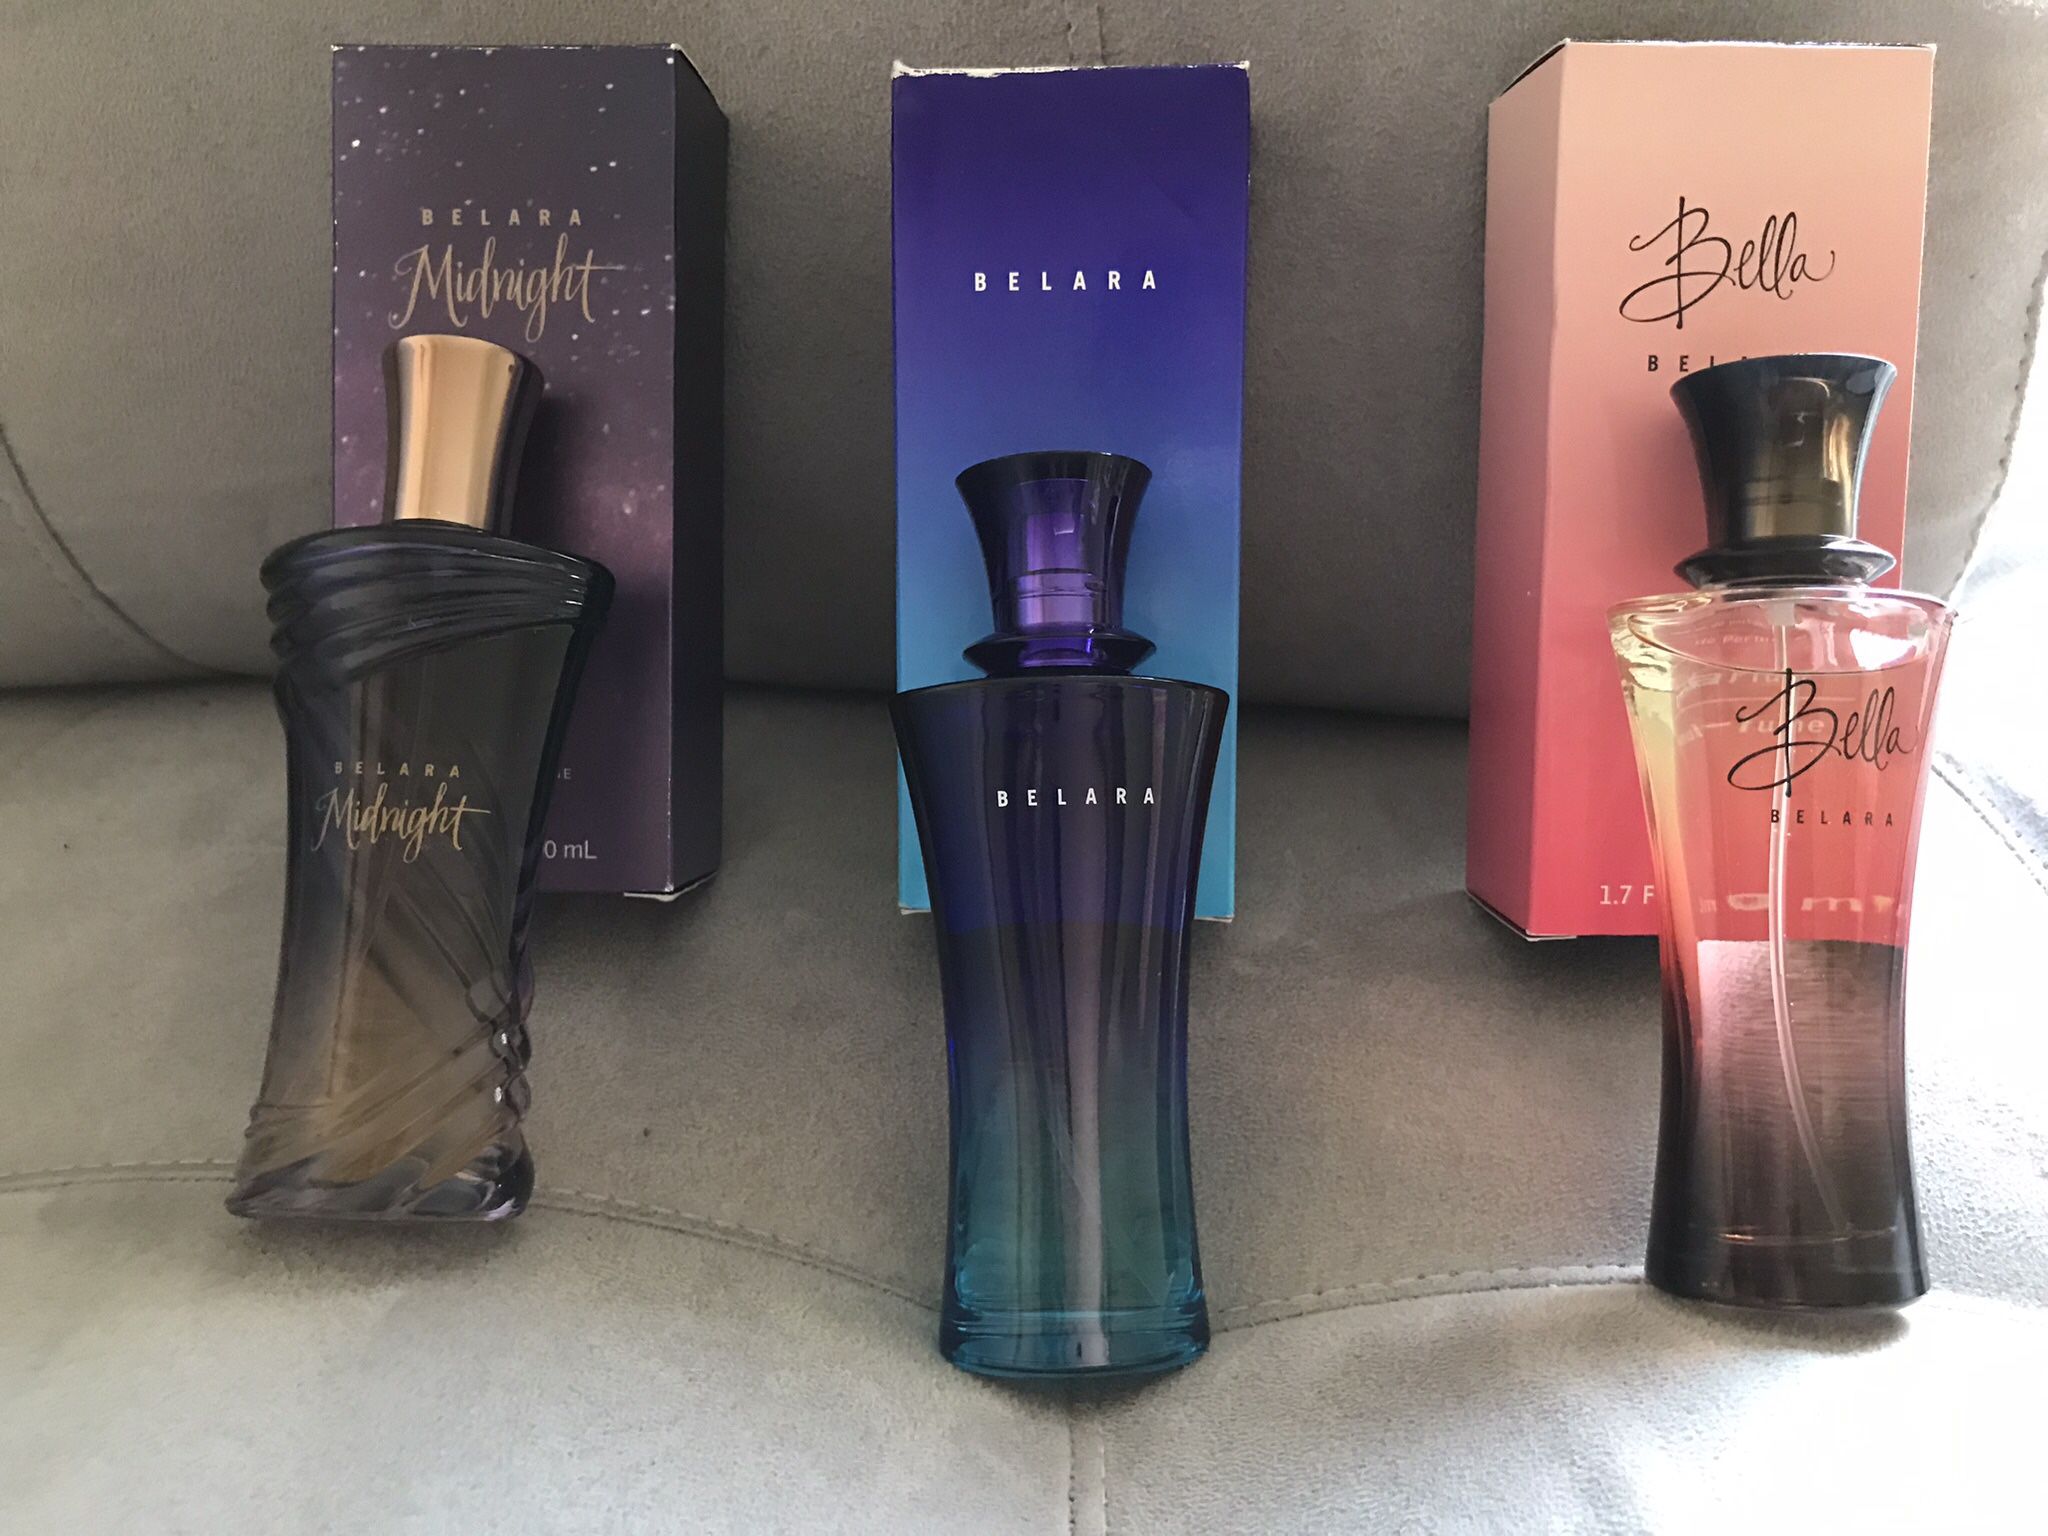 perfume chanel set